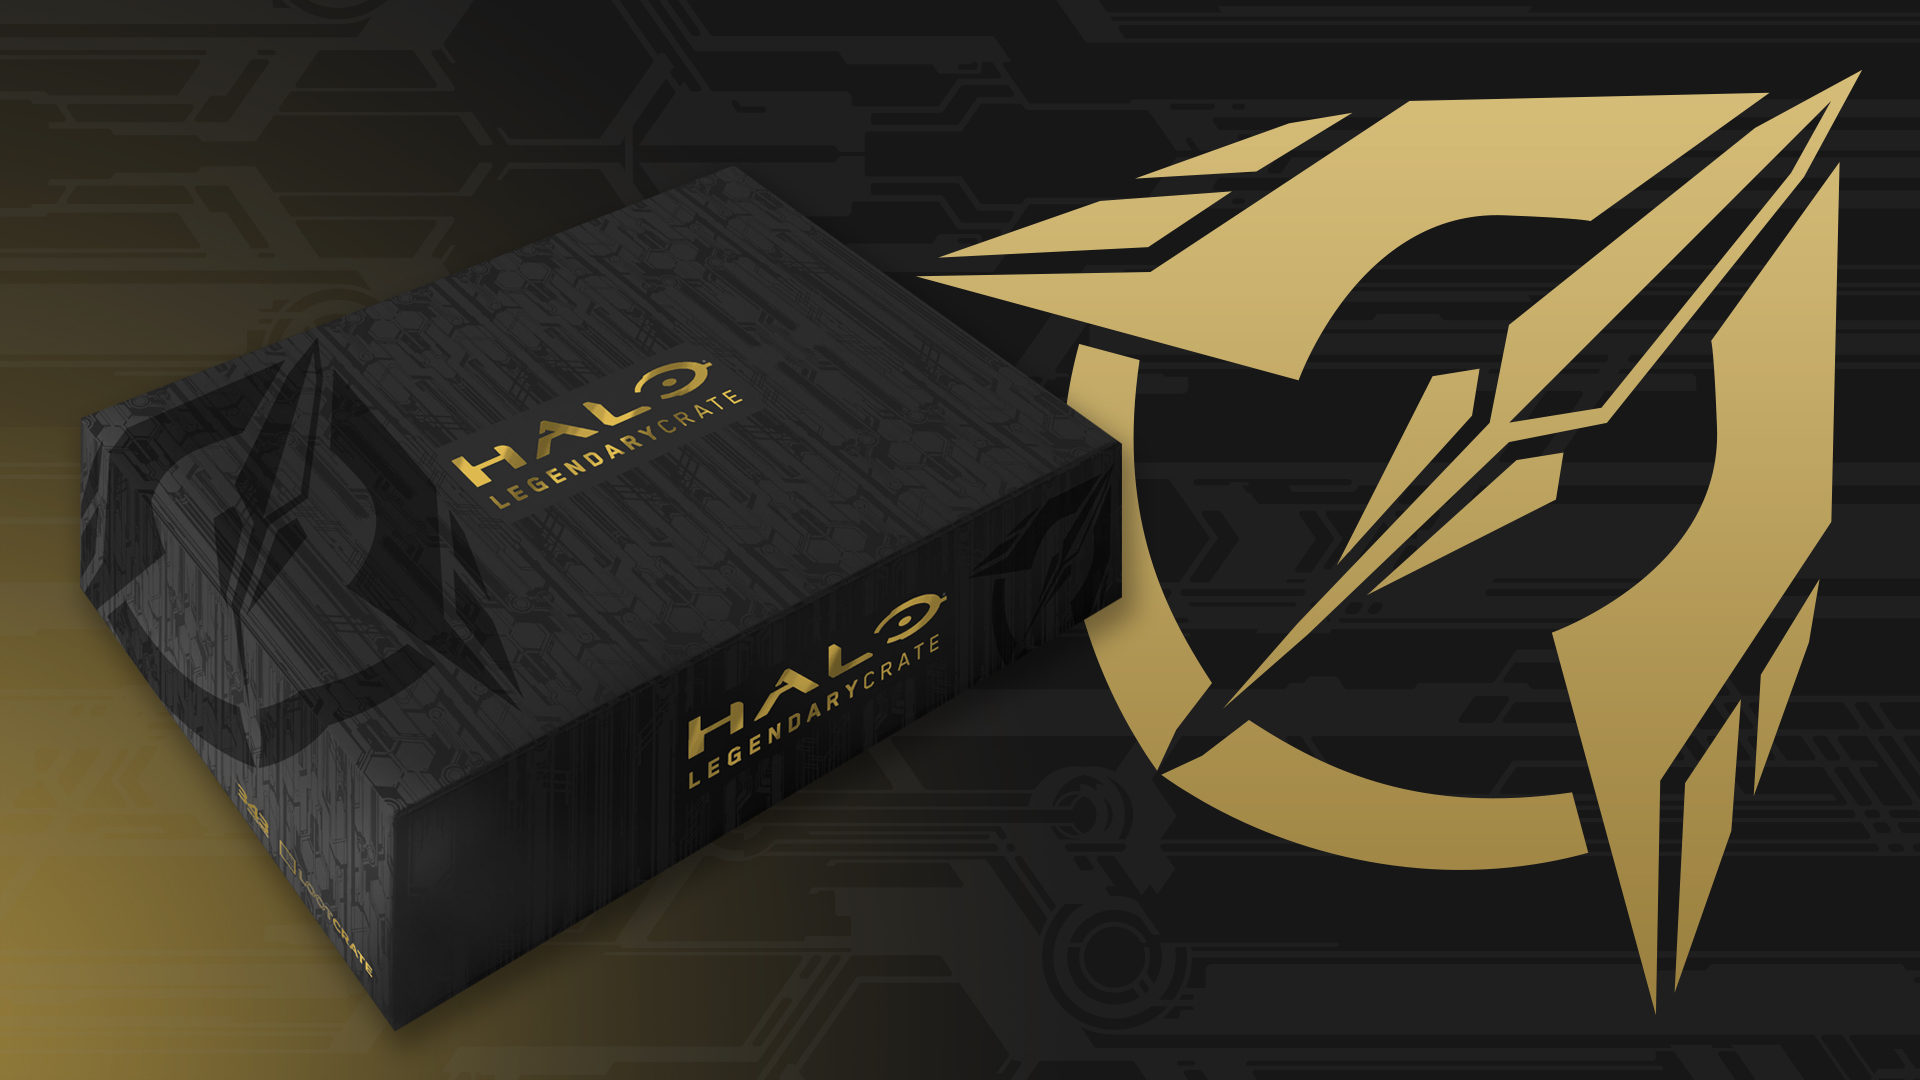 Halo Legendary Crate